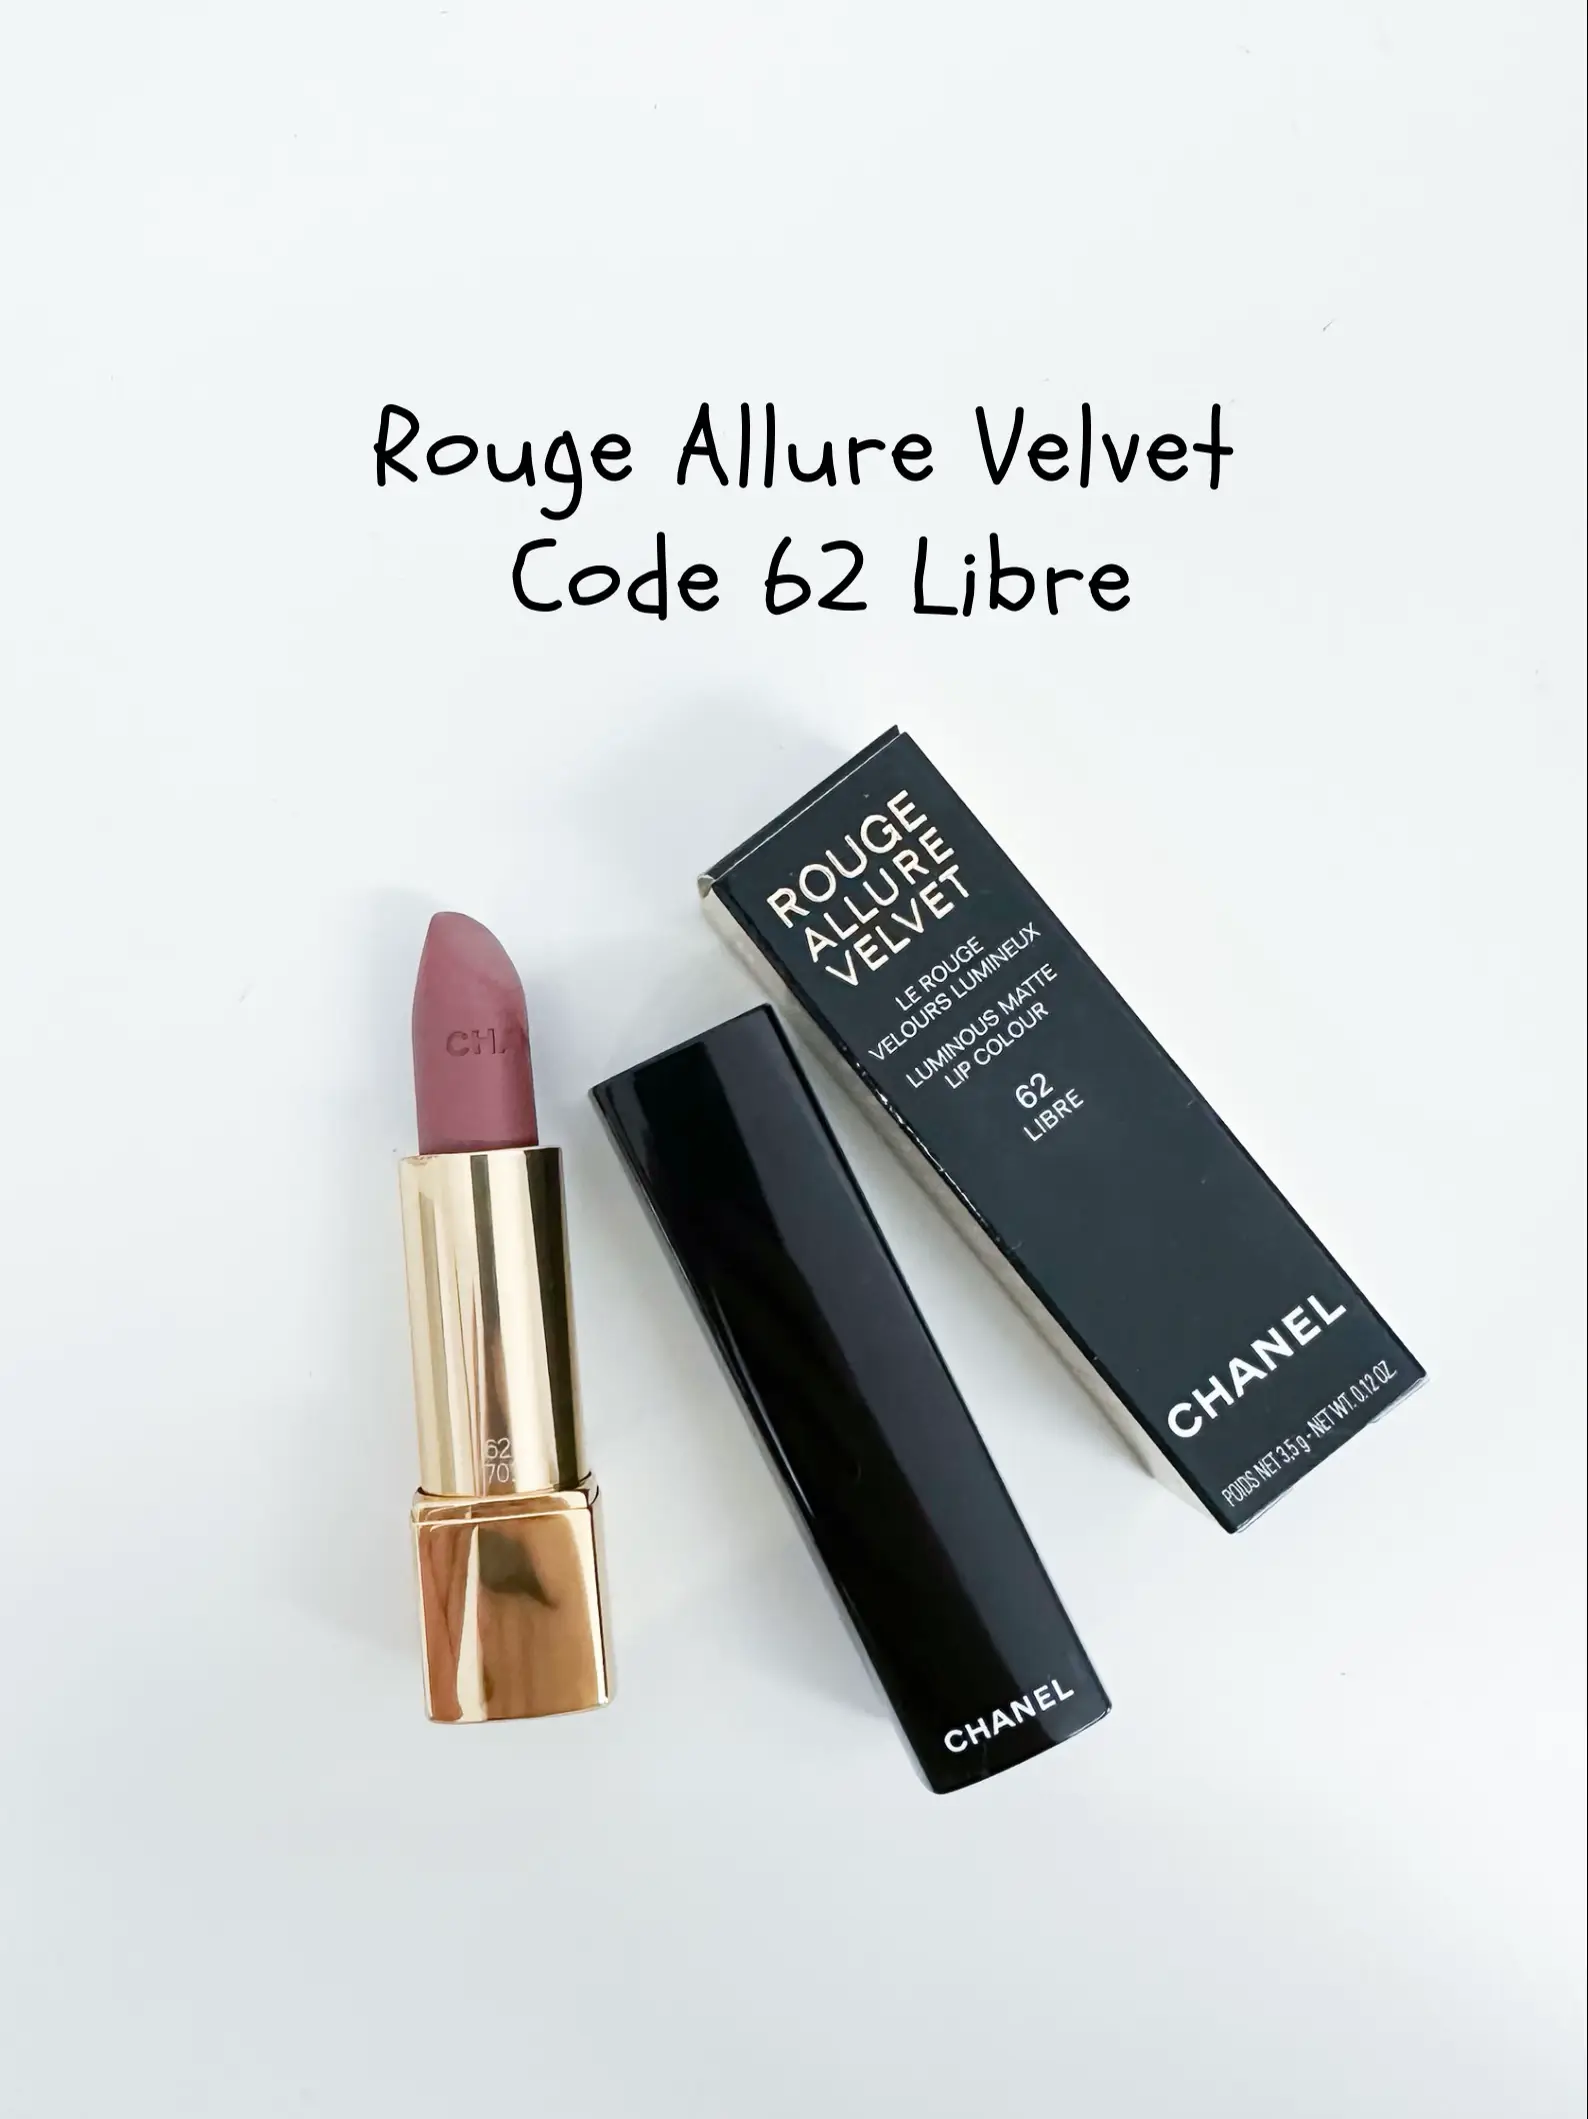 ✨Chanel Lipstick Review - Nude Colour✨